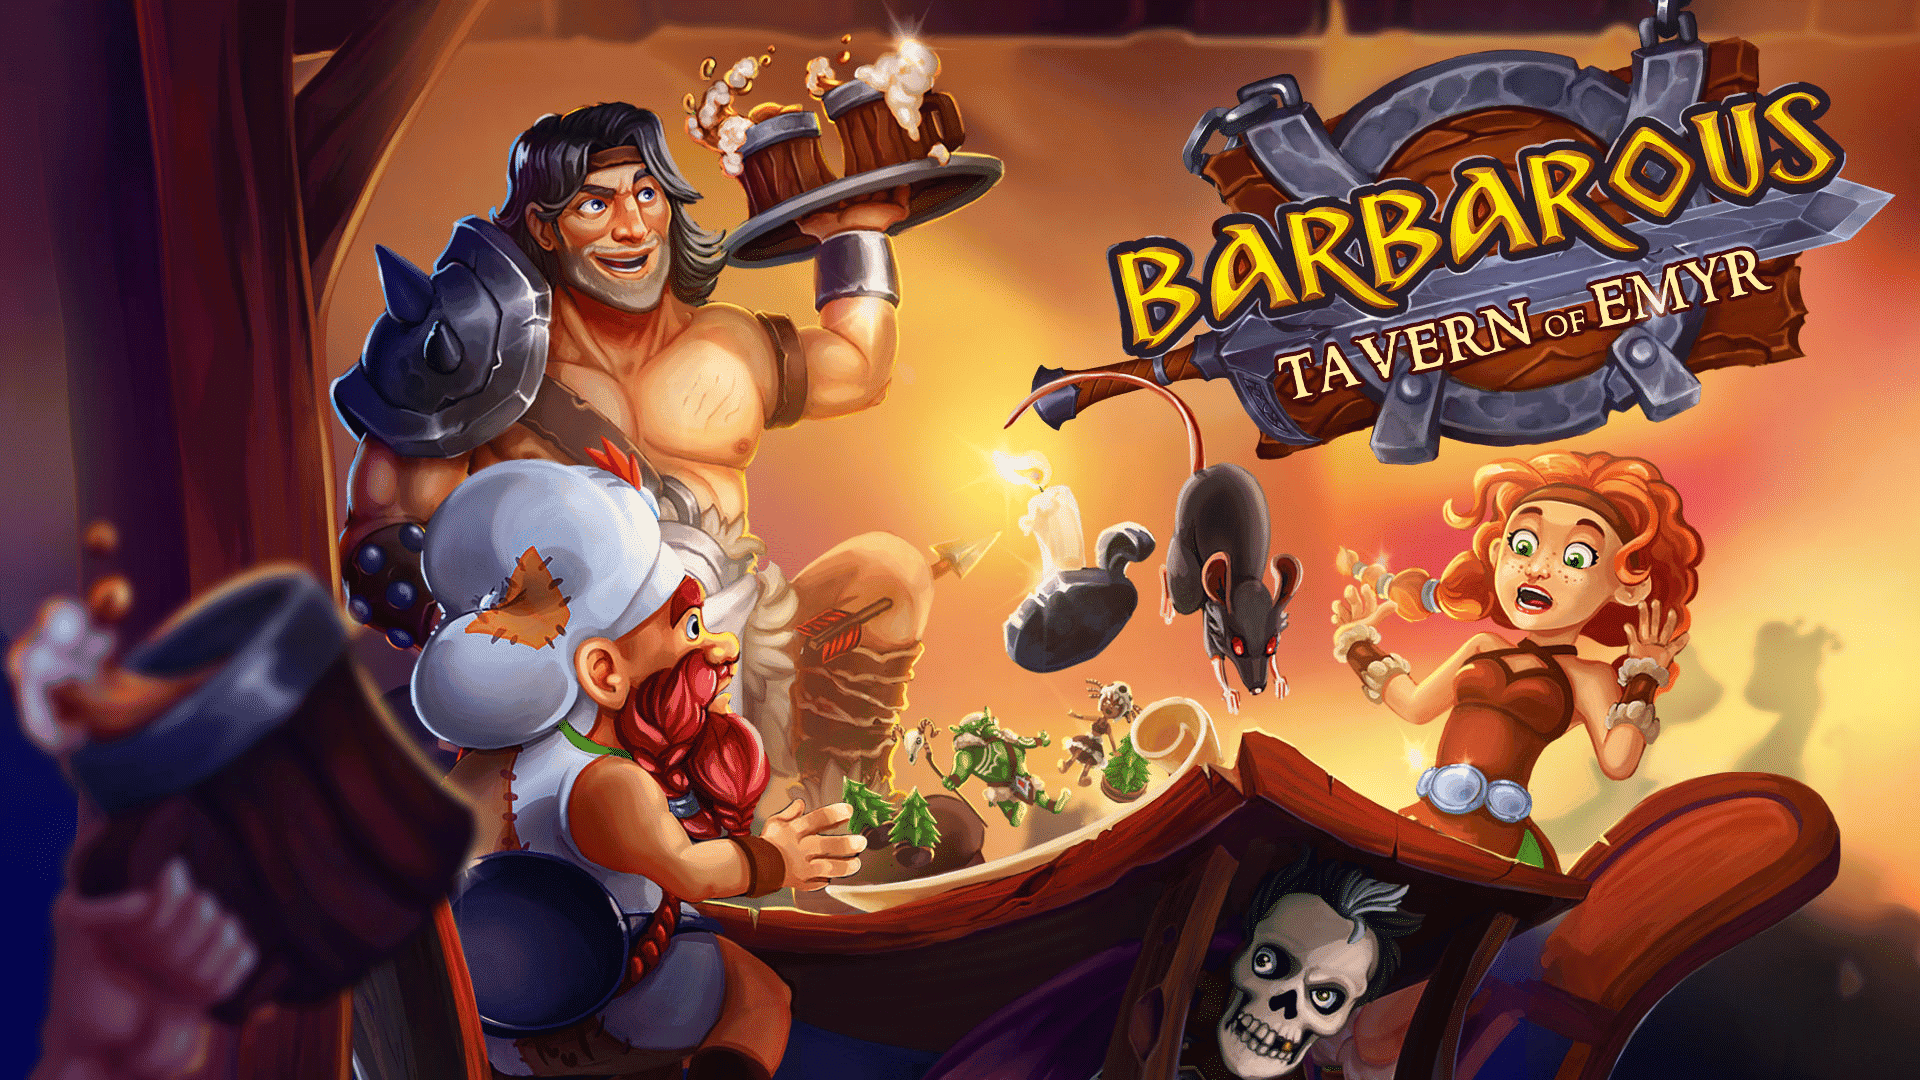 Barbarous: Tavern of Emyr llega el 25 de diciembre a Nintendo Switch